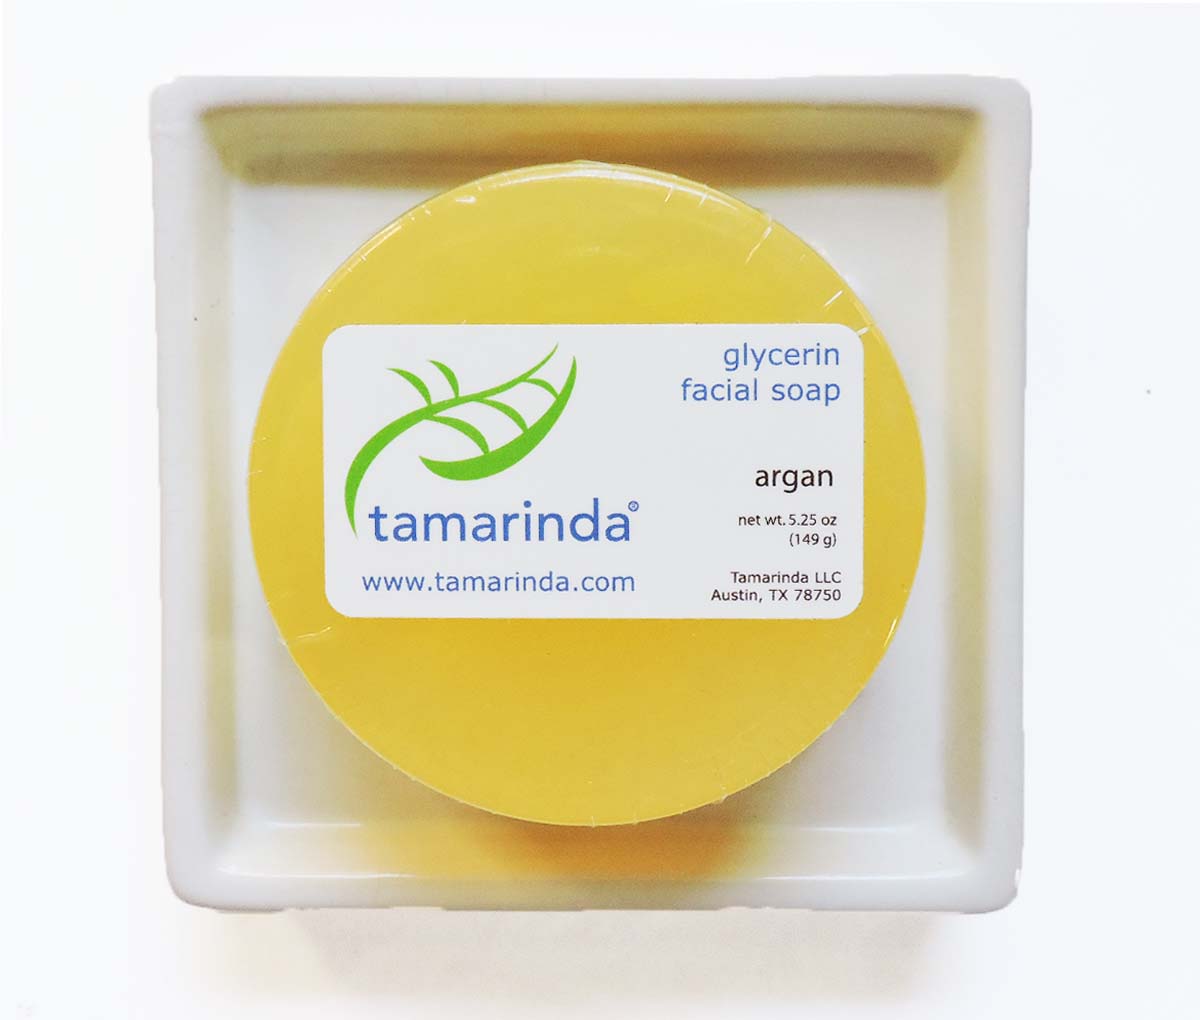 Tamarinda argan formula glycerin facial soap is unscented and sulfate free. 5 oz.